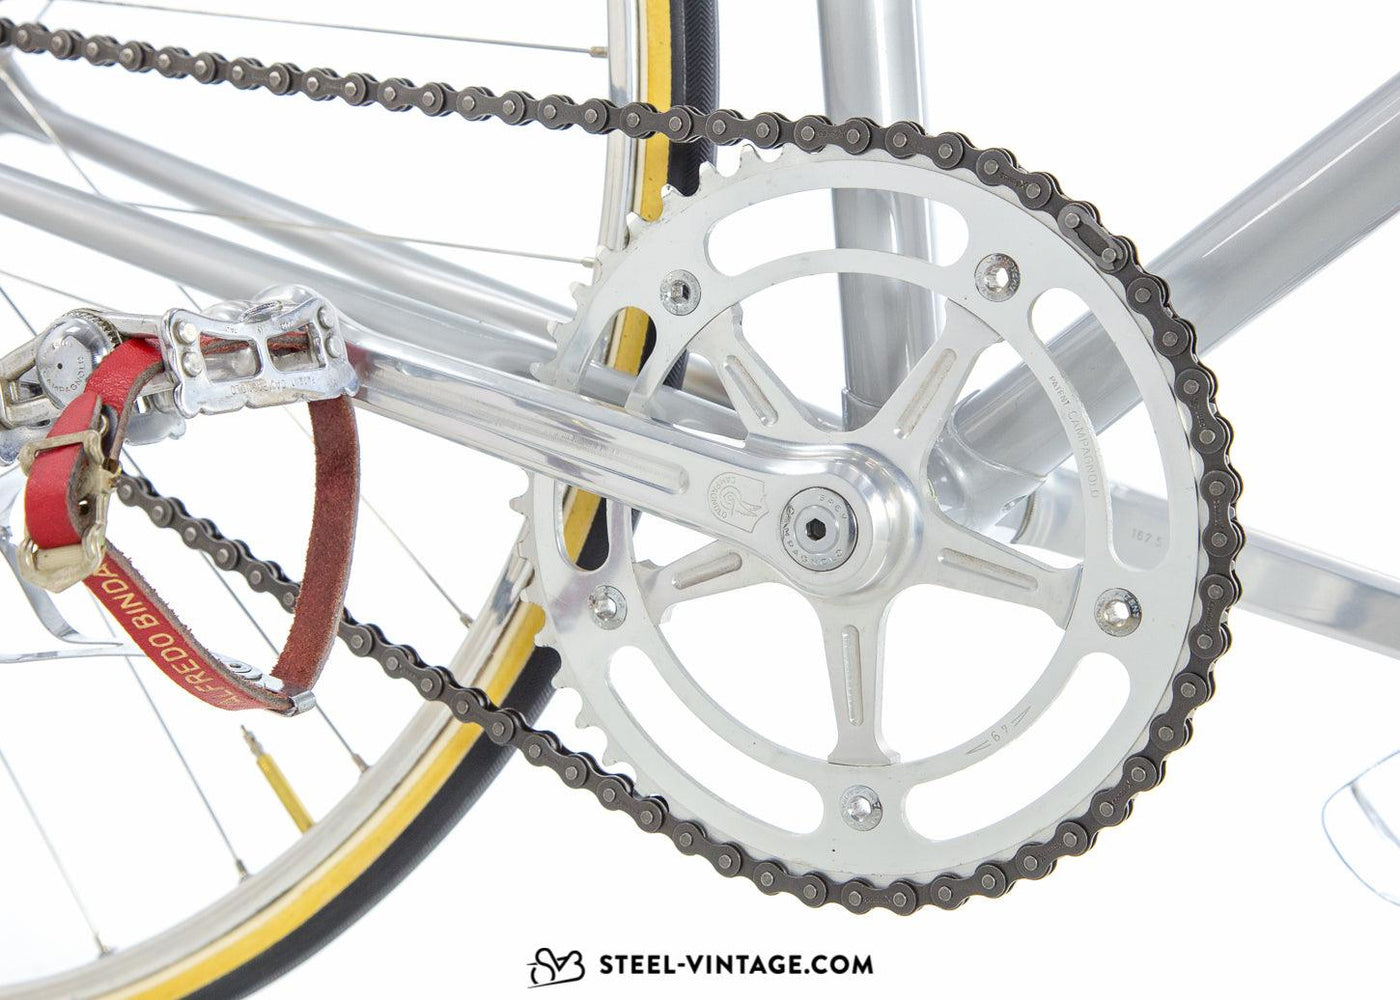 Cinelli Pista Track bike - Steel Vintage Bikes